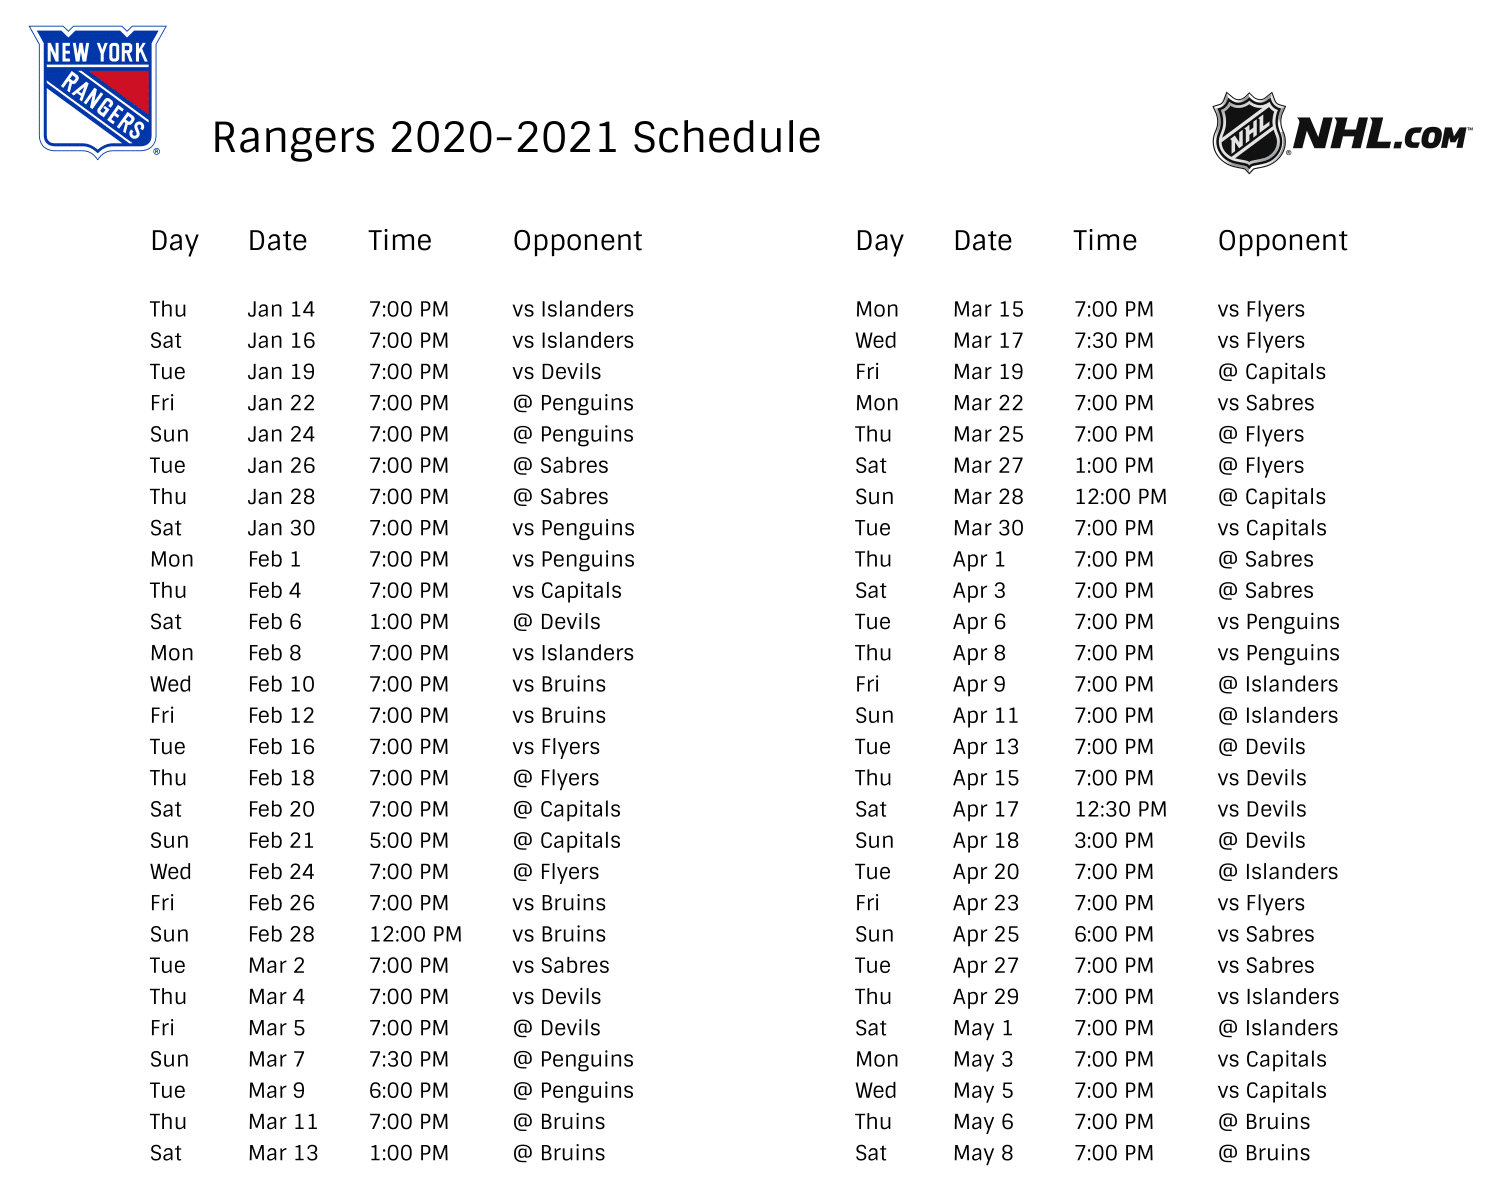 Rangers-Printable-Schedule-_-NHL.com-1